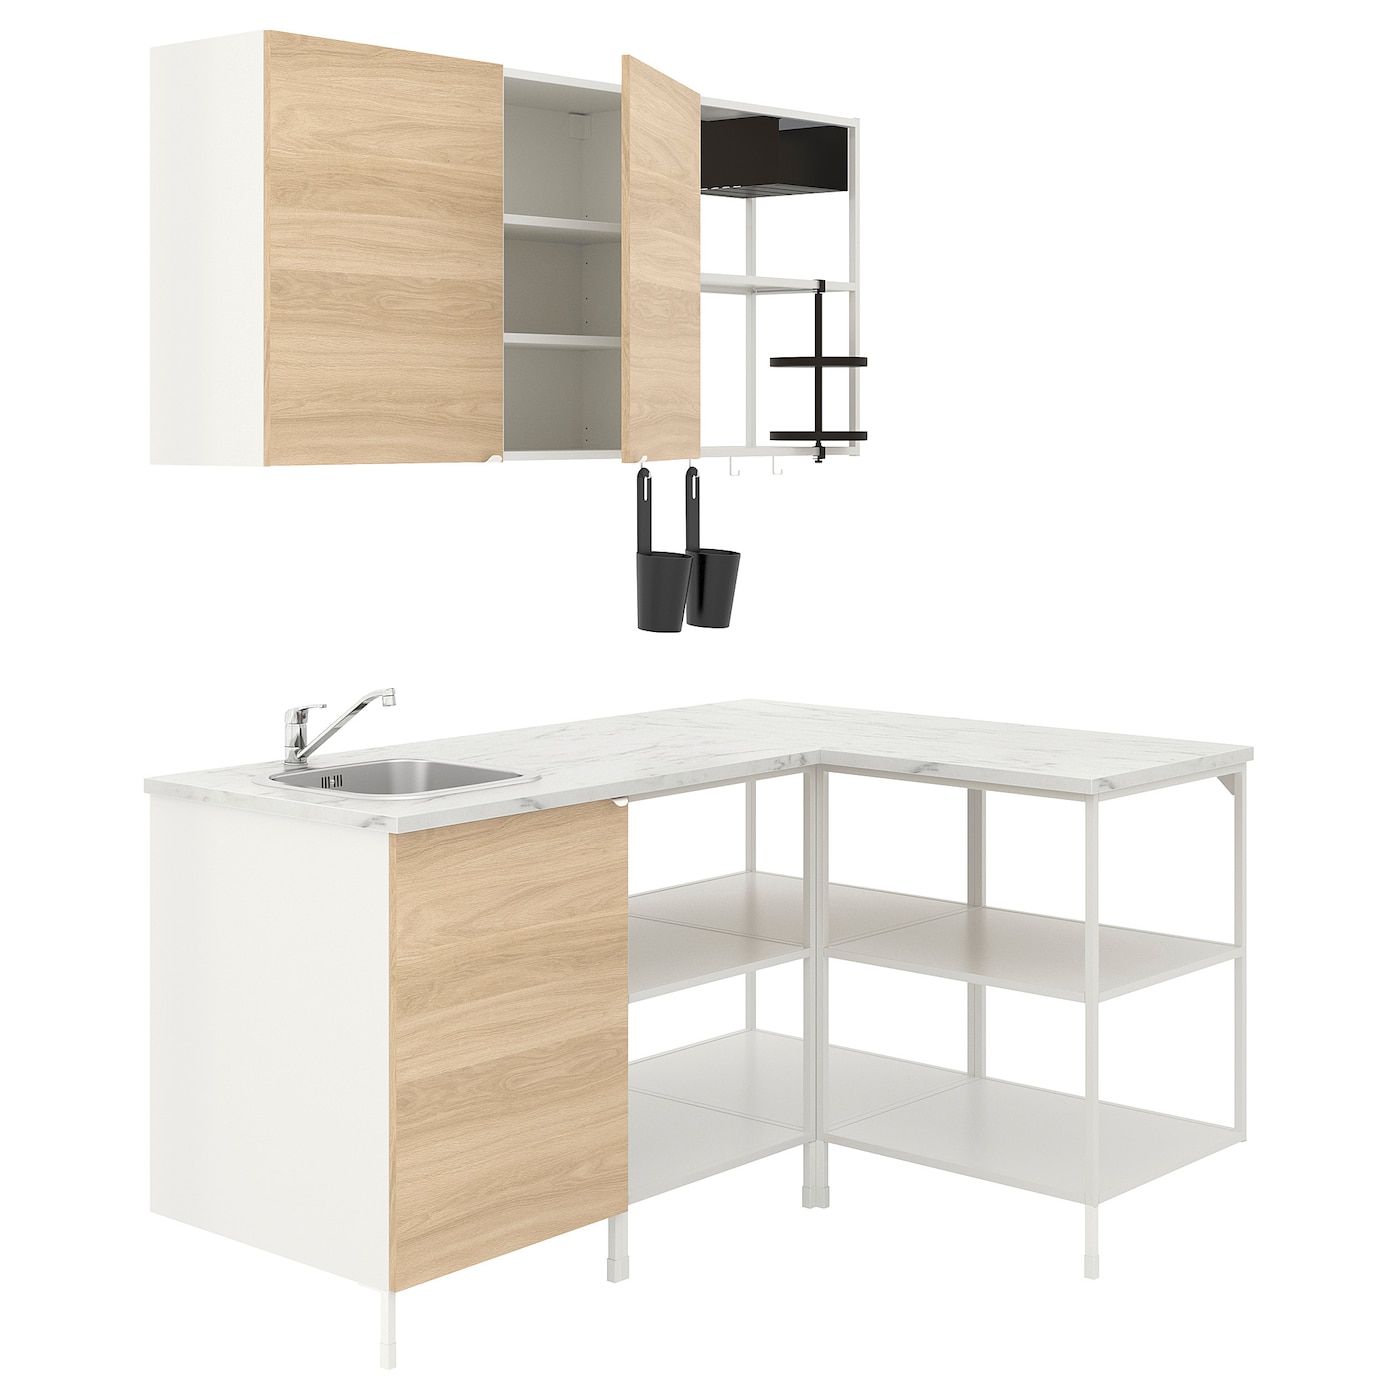 Угловая кухонная комбинация для хранения - ENHET  IKEA/ ЭНХЕТ ИКЕА, 181,5х121,5х75 см, белый/бежевый